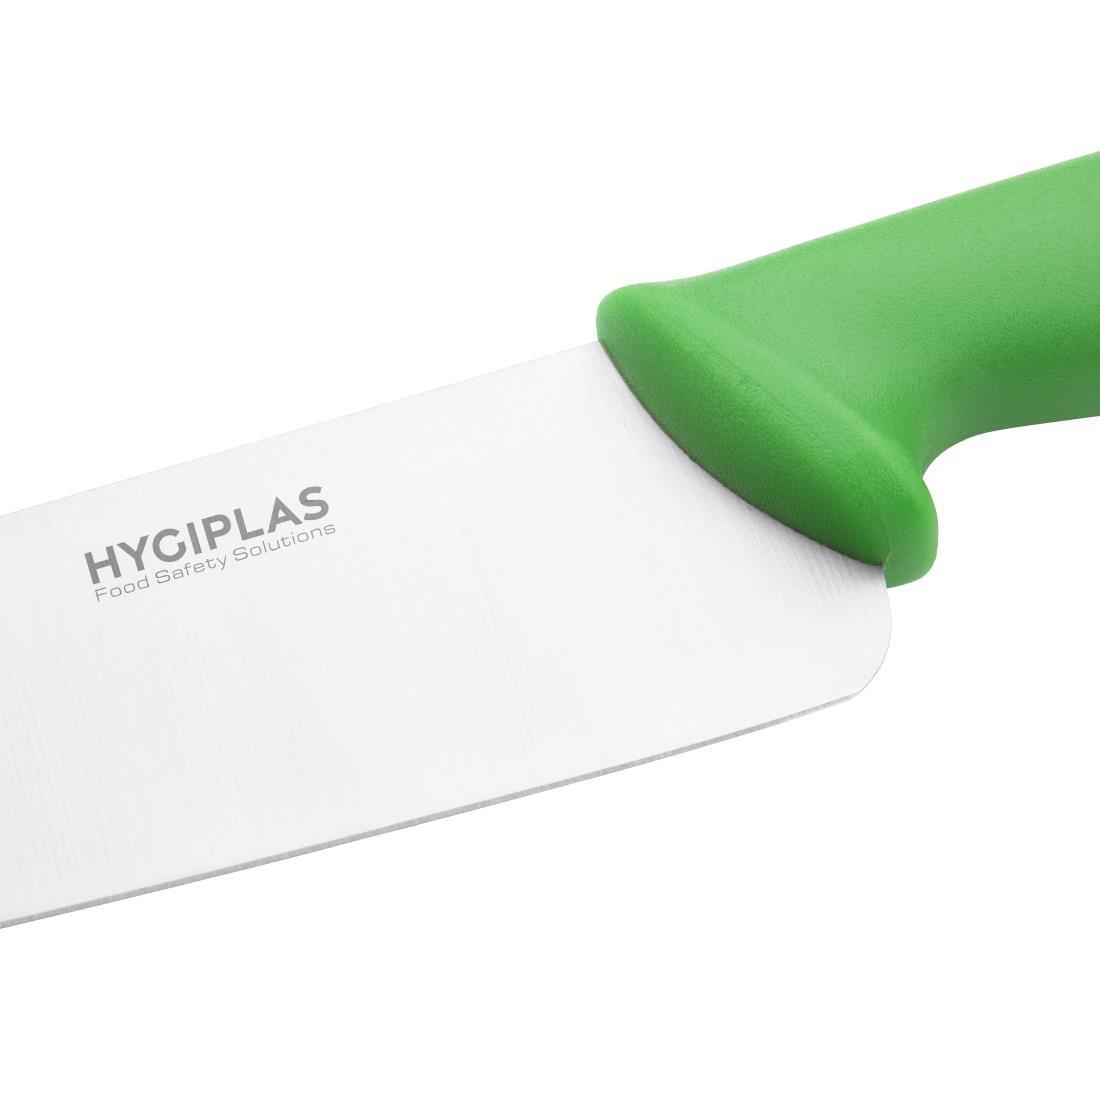 Hygiplas Chef Knife Green 25.5cm - C868  - 3